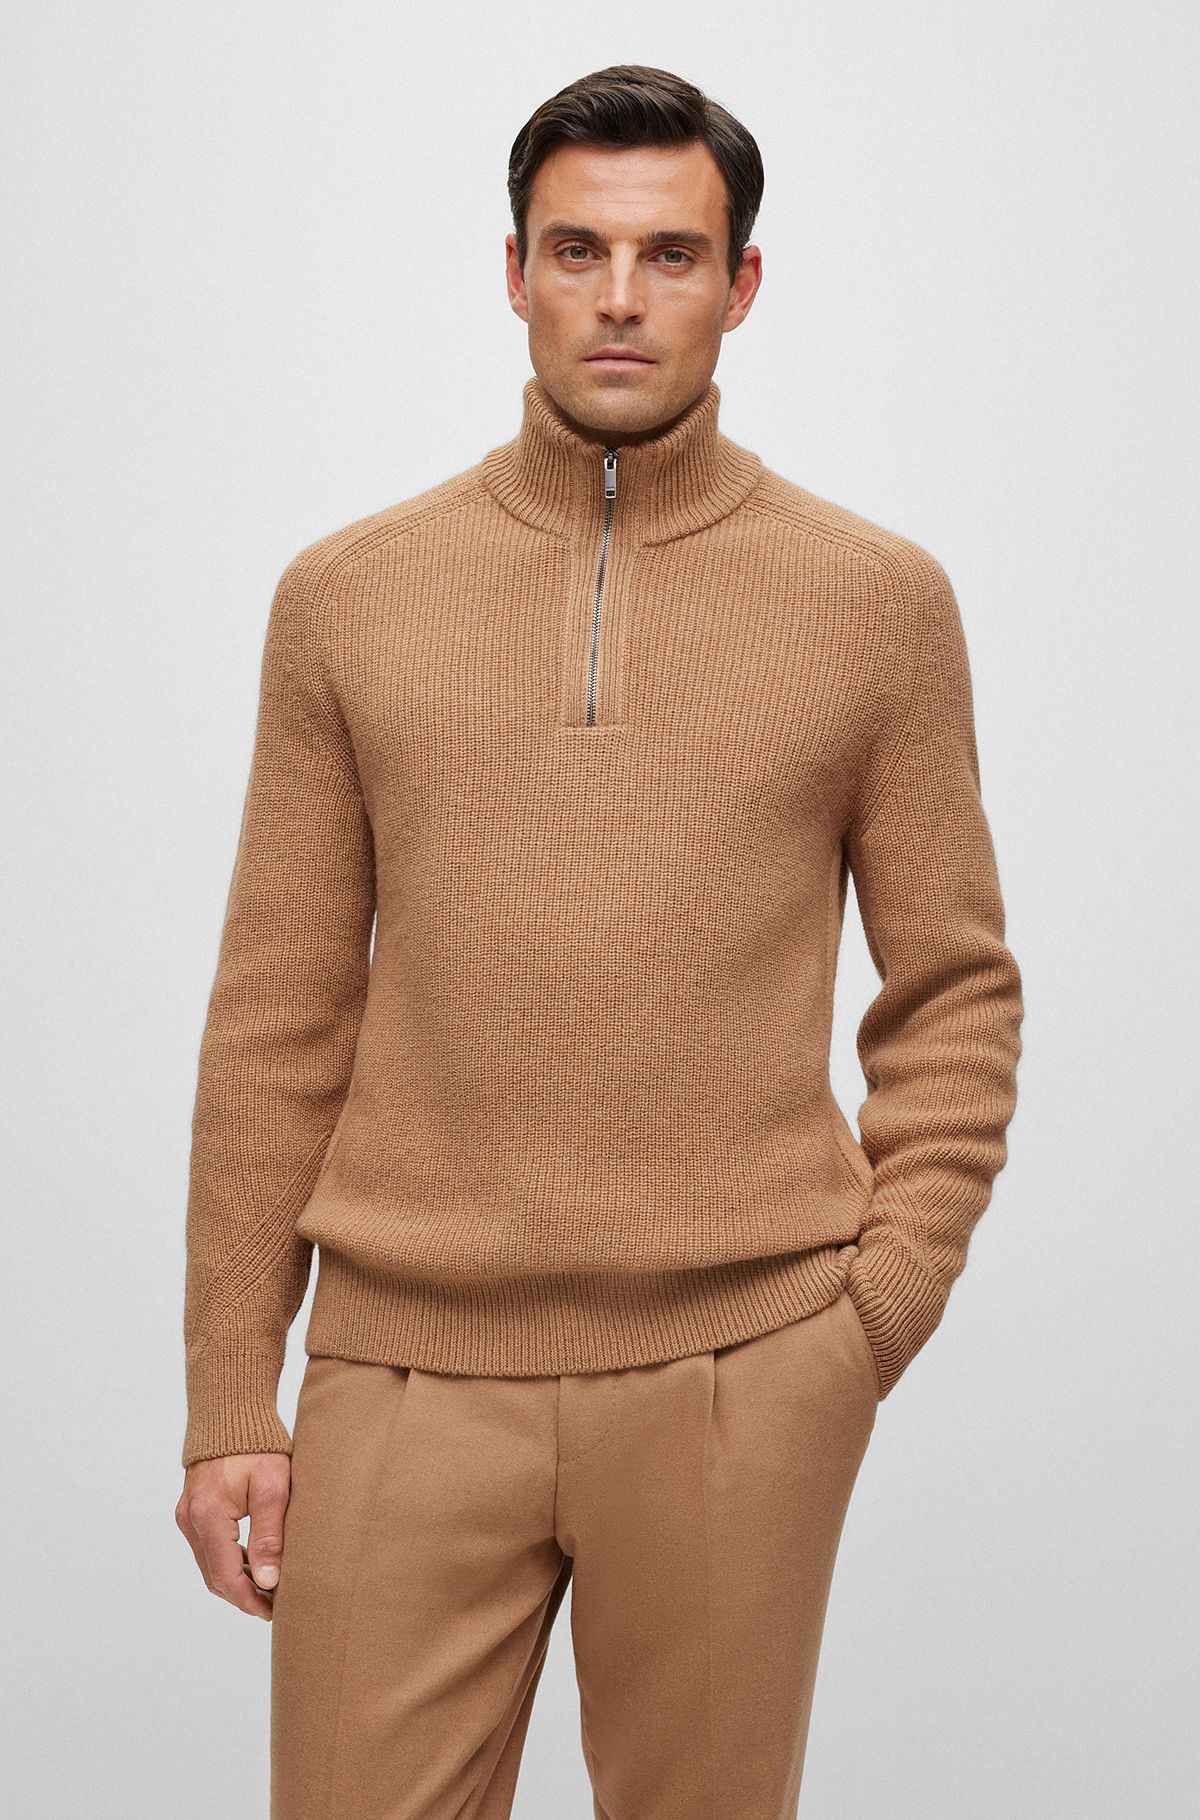 Camel-hair sweater with zip neckline, Beige